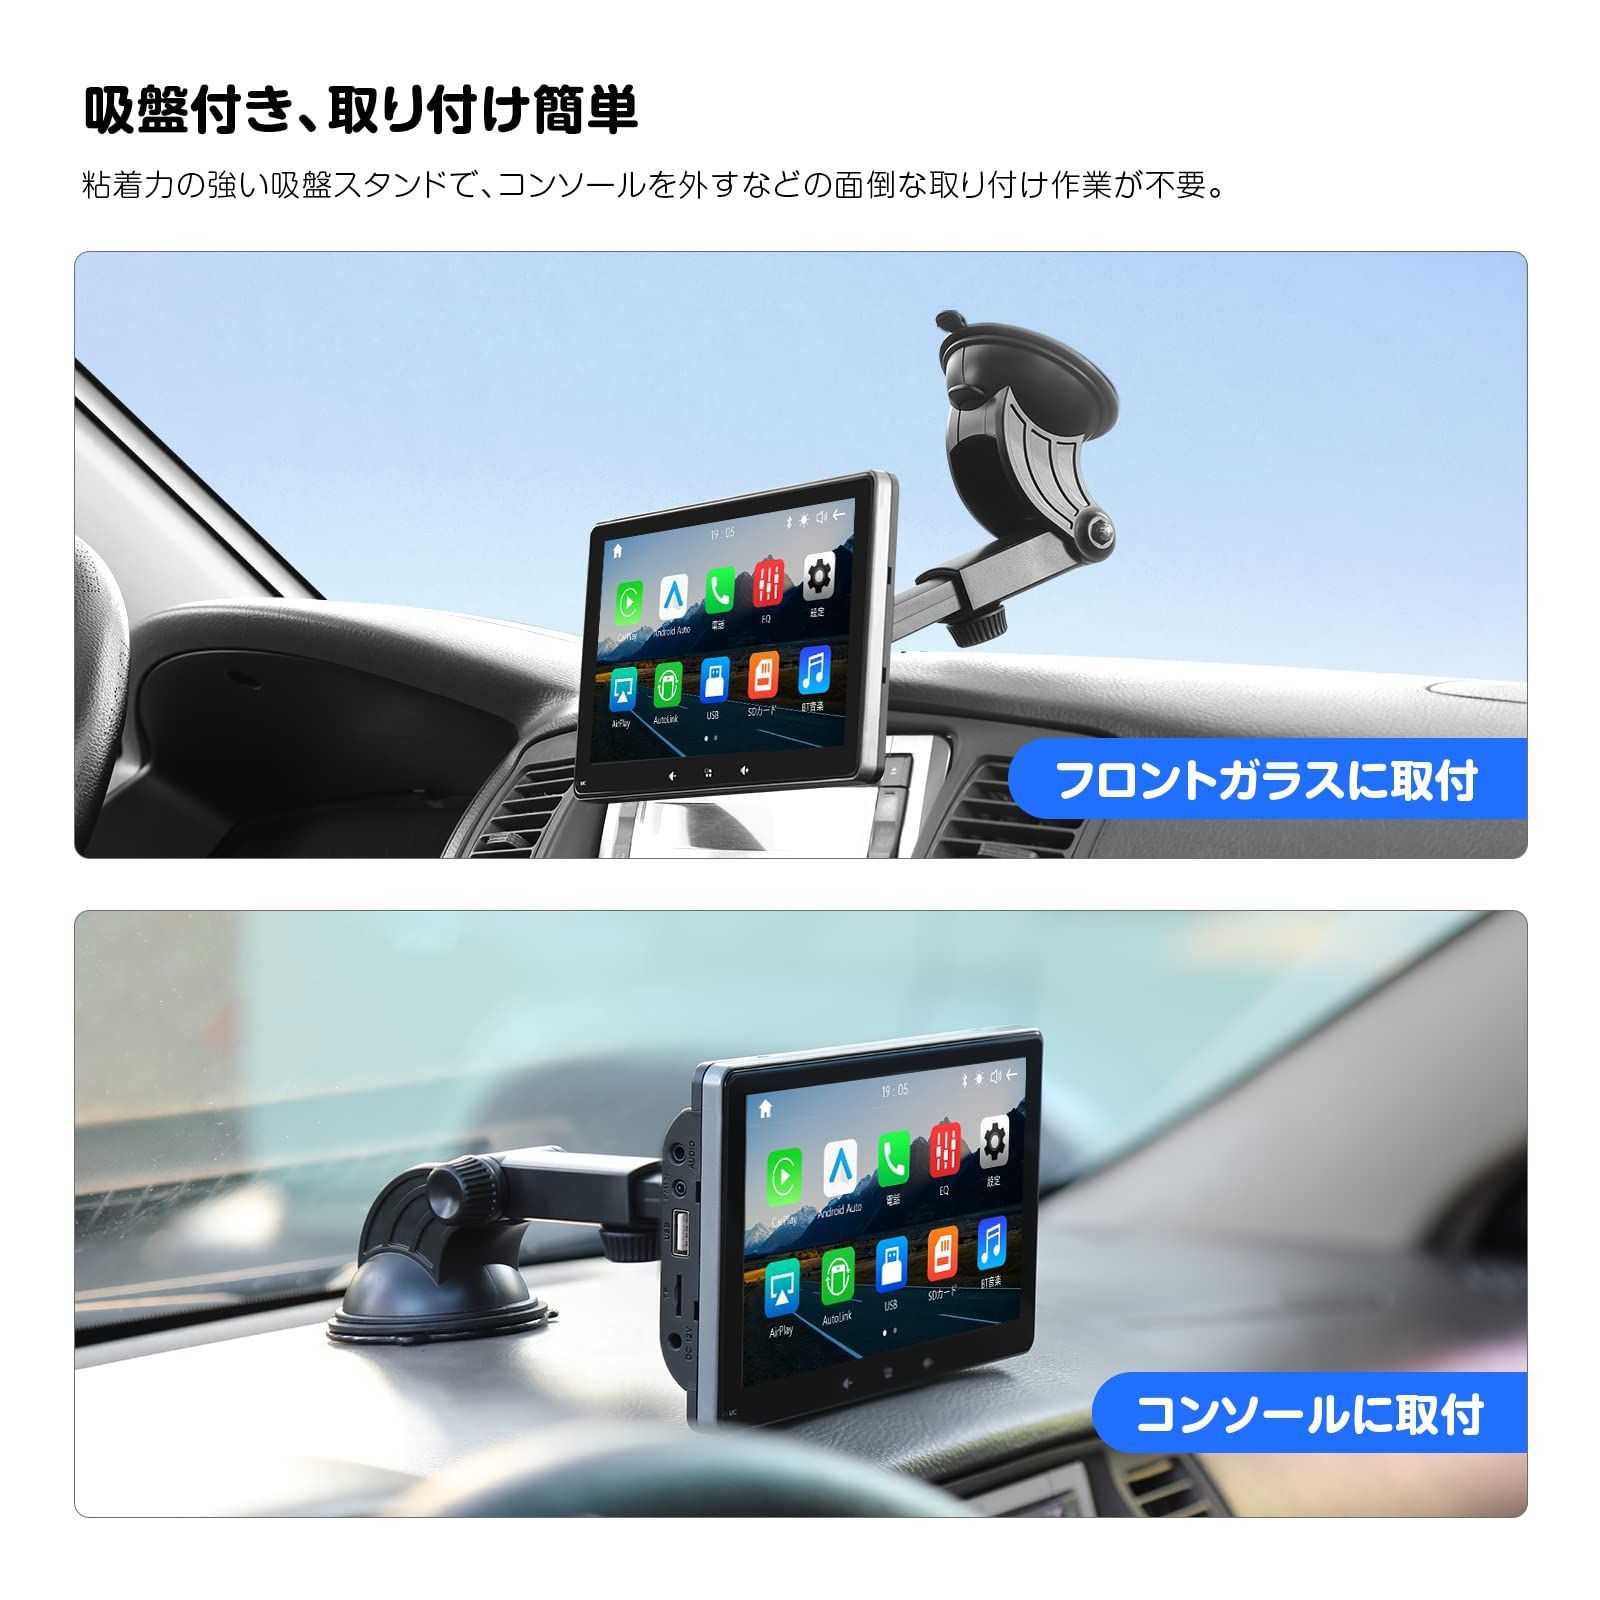 EONON ポータブルナビ ワイヤレス CarPlay u0026 ワイヤレス Android Auto ミラーリング対応 7インチ QLEDタッチパネル カー オーディオプレーヤー 12V-24V車通用 ポータブル カーナビ E20J - メルカリ